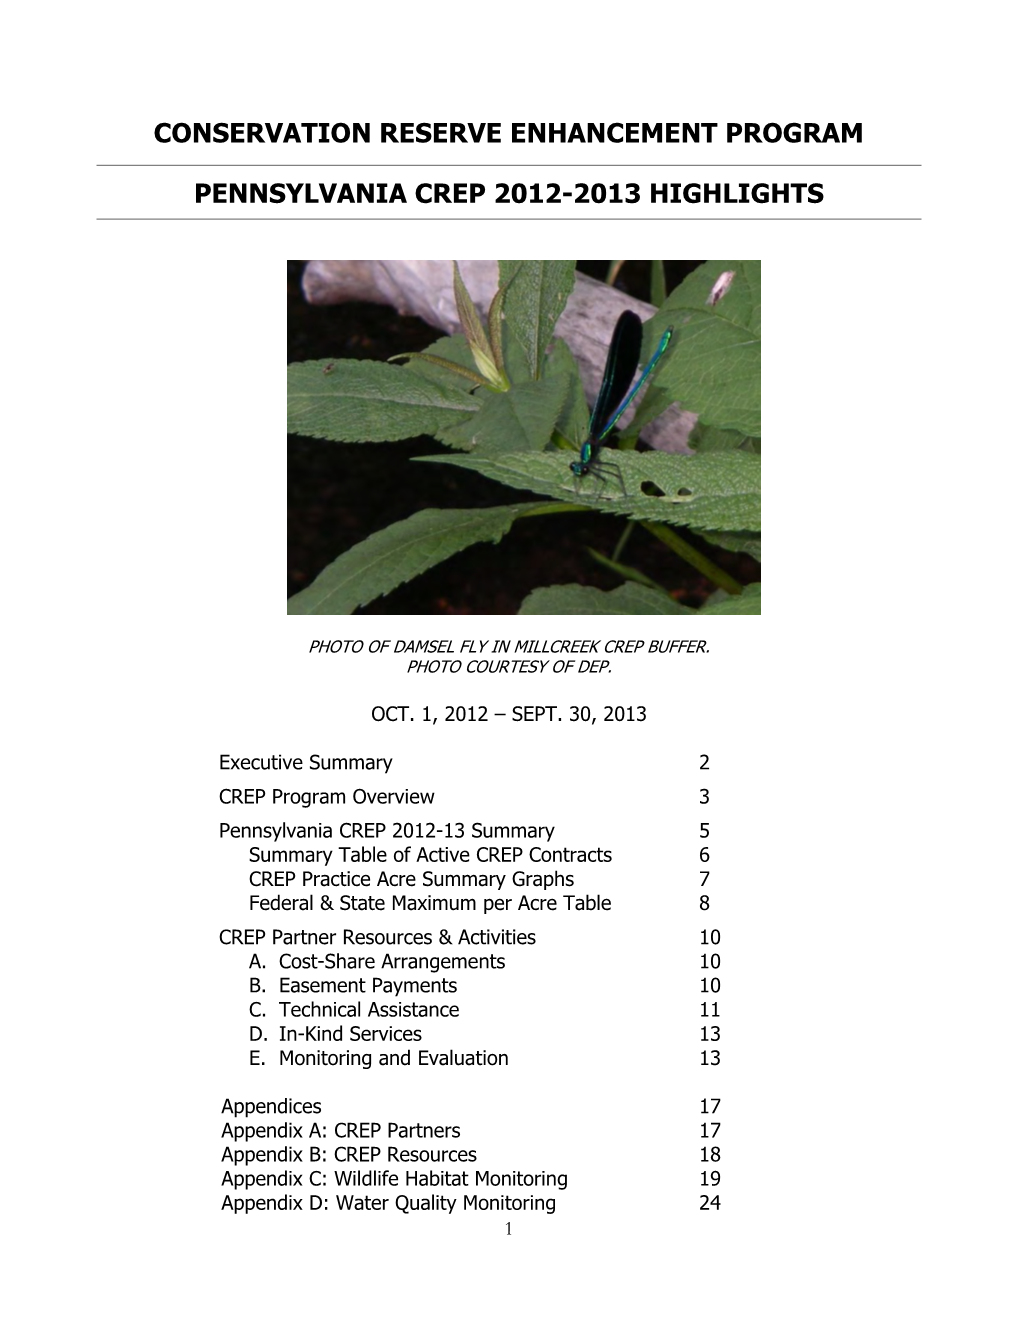 Conservation Reserve Enhancement Program Pennsylvania Crep 2012-2013 Highlights